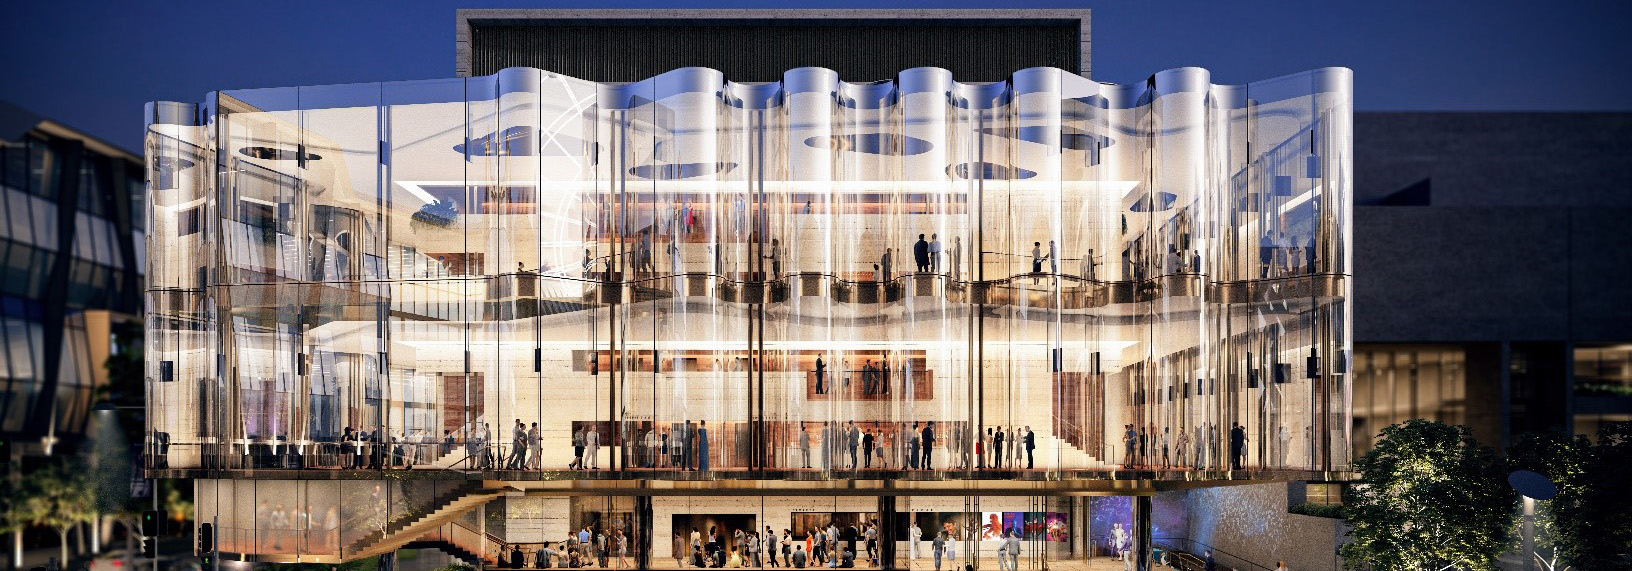 New Performing Arts Venue, Brisbane: gewellte Ganzglas-Fassade made by seele